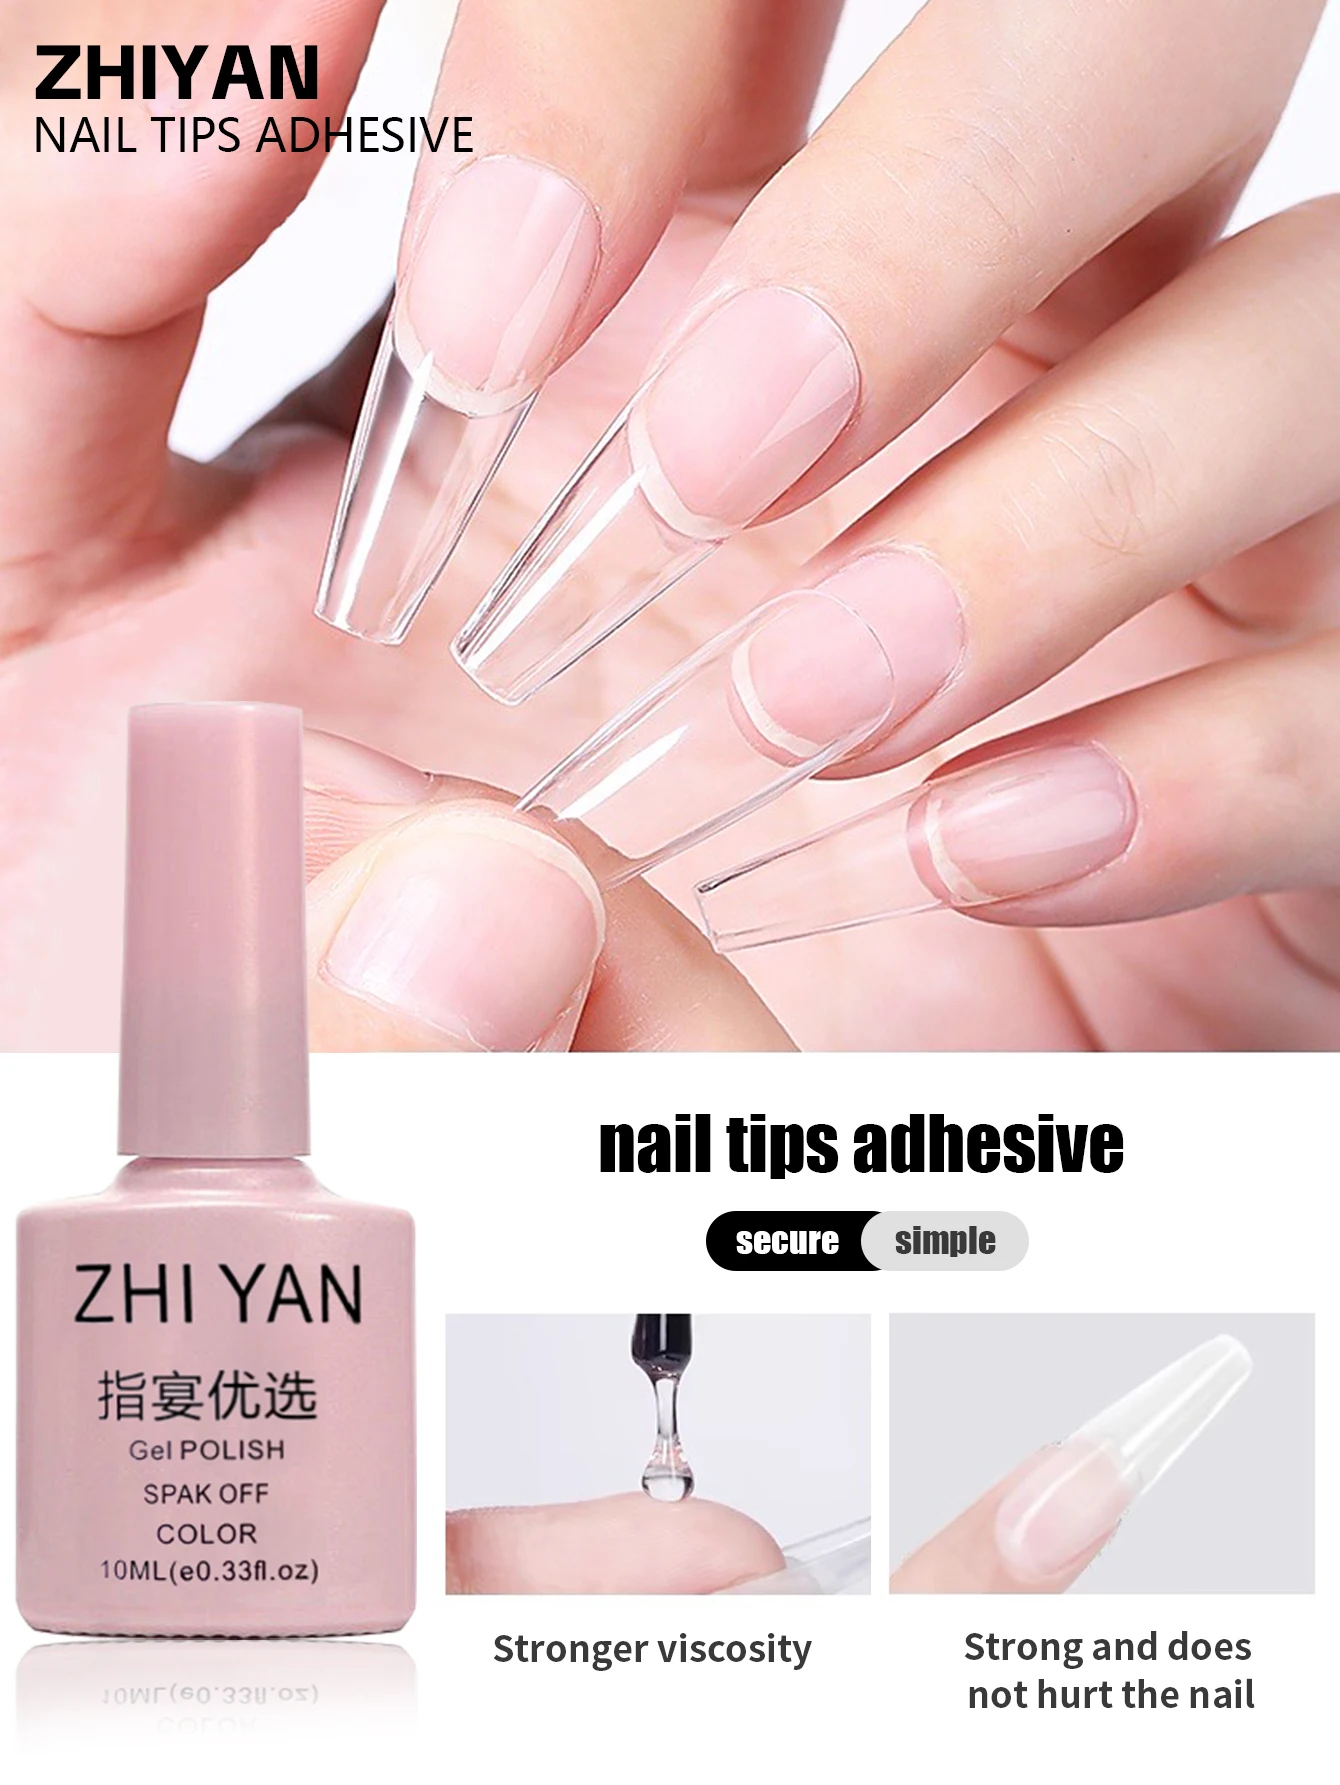 

ZHIYAN Nail Tip Bonding Glue For Professional Salon,10ML,Professional Nail Glue For Nail Tips For Press On Nails